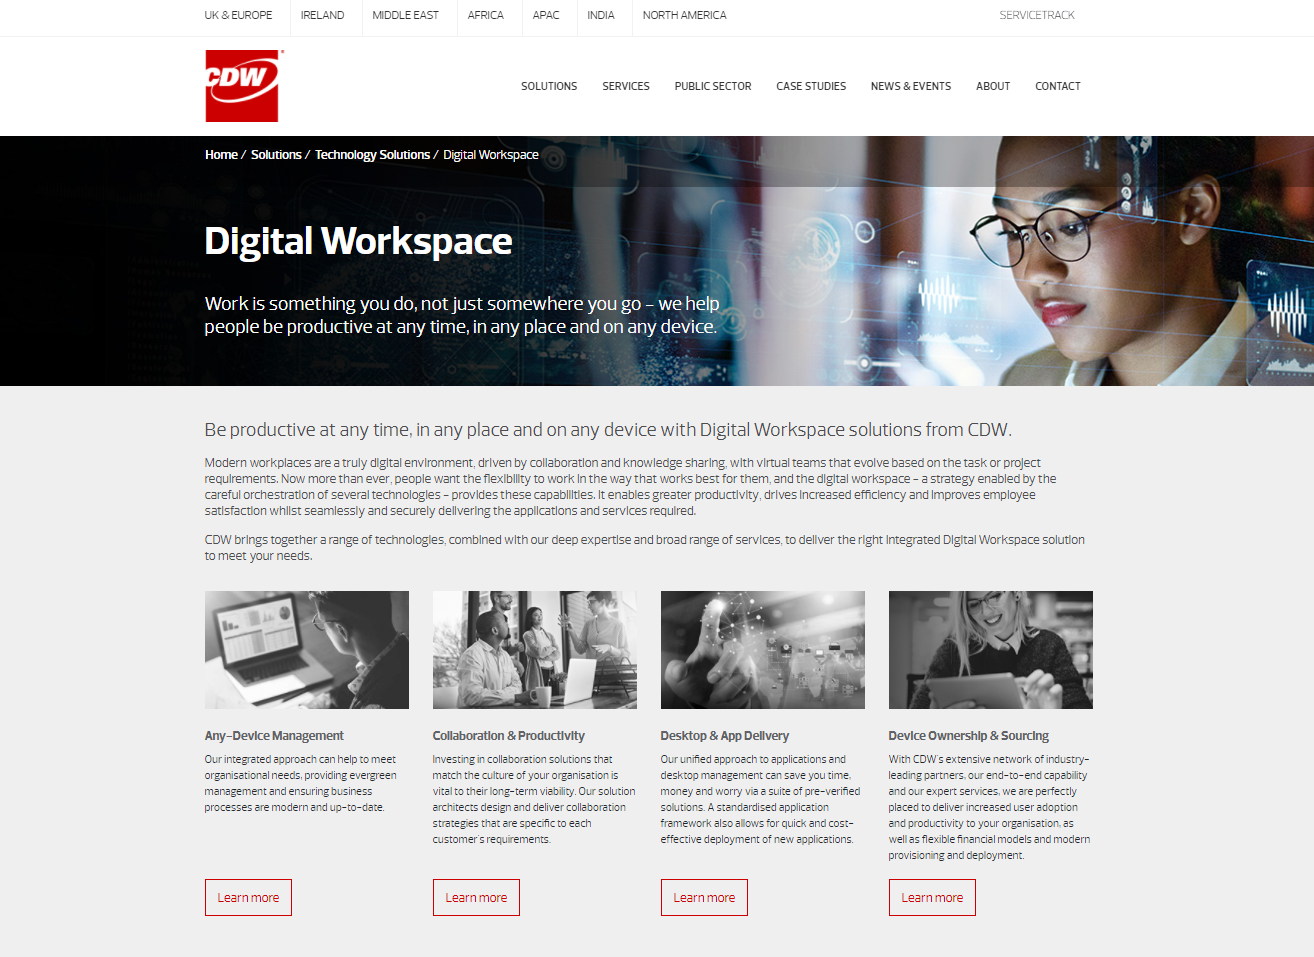 CDW web content - digital workspace